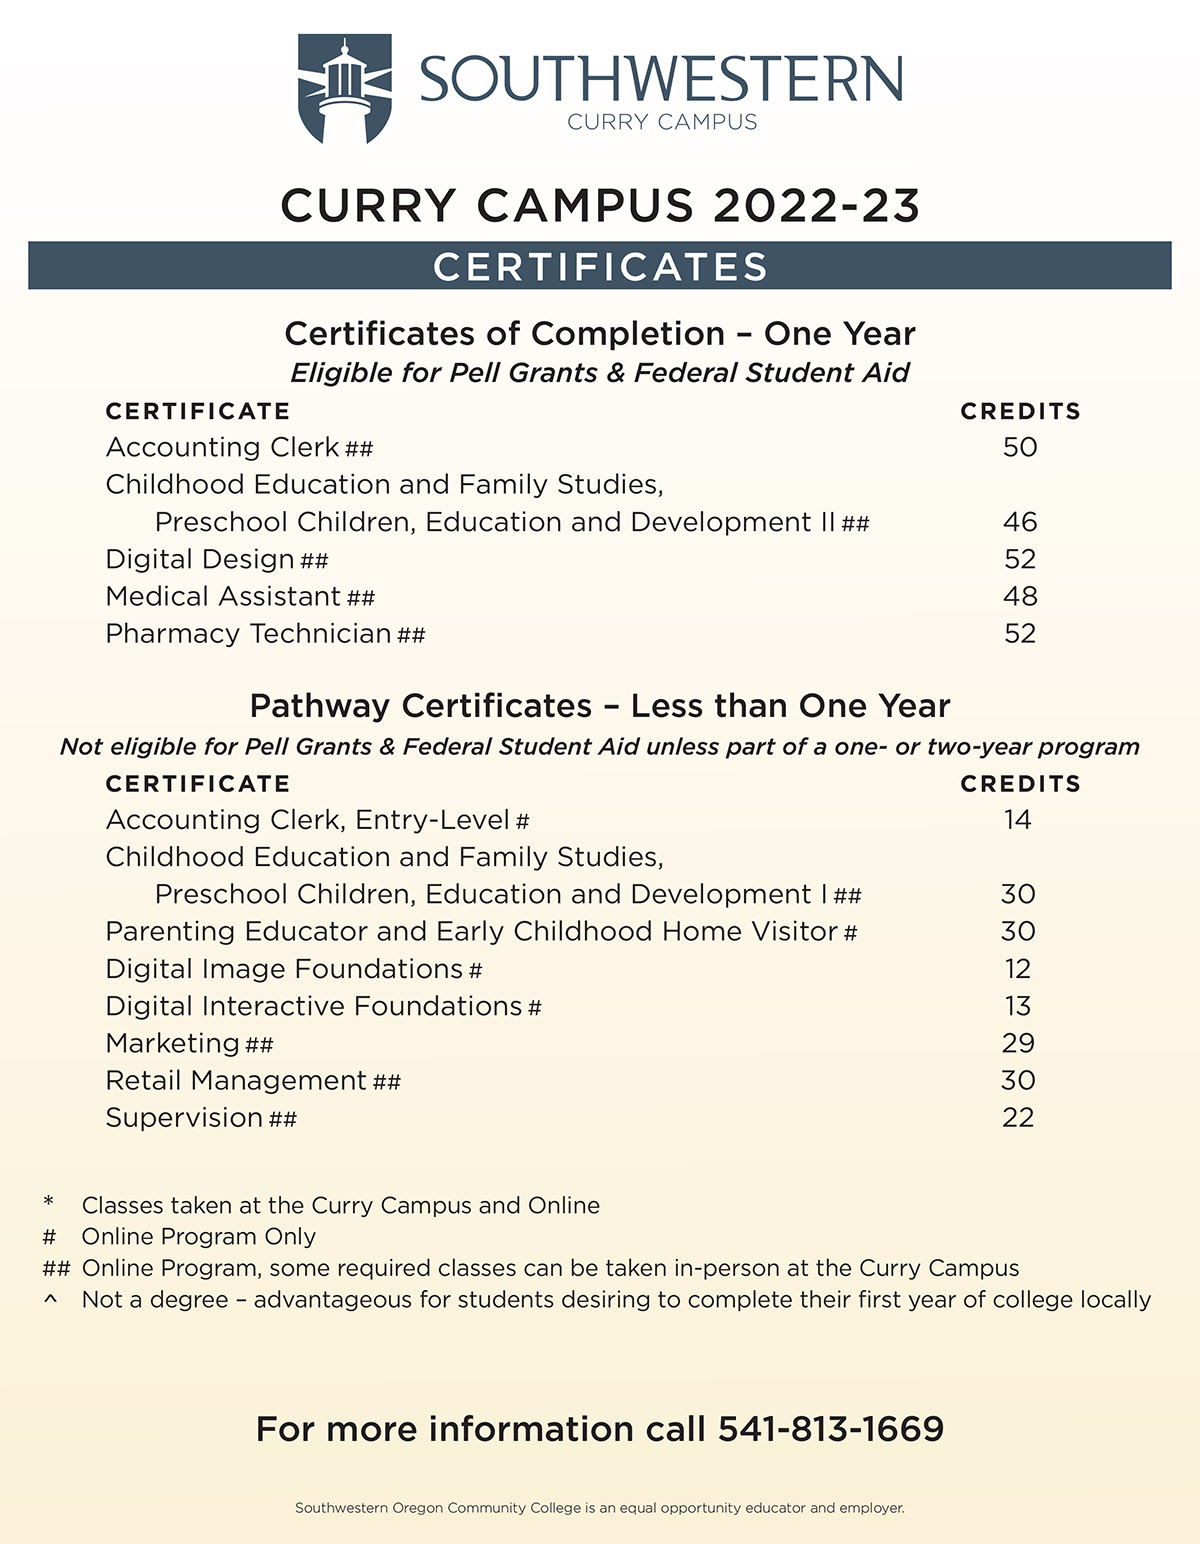 Curry Campus Certificates